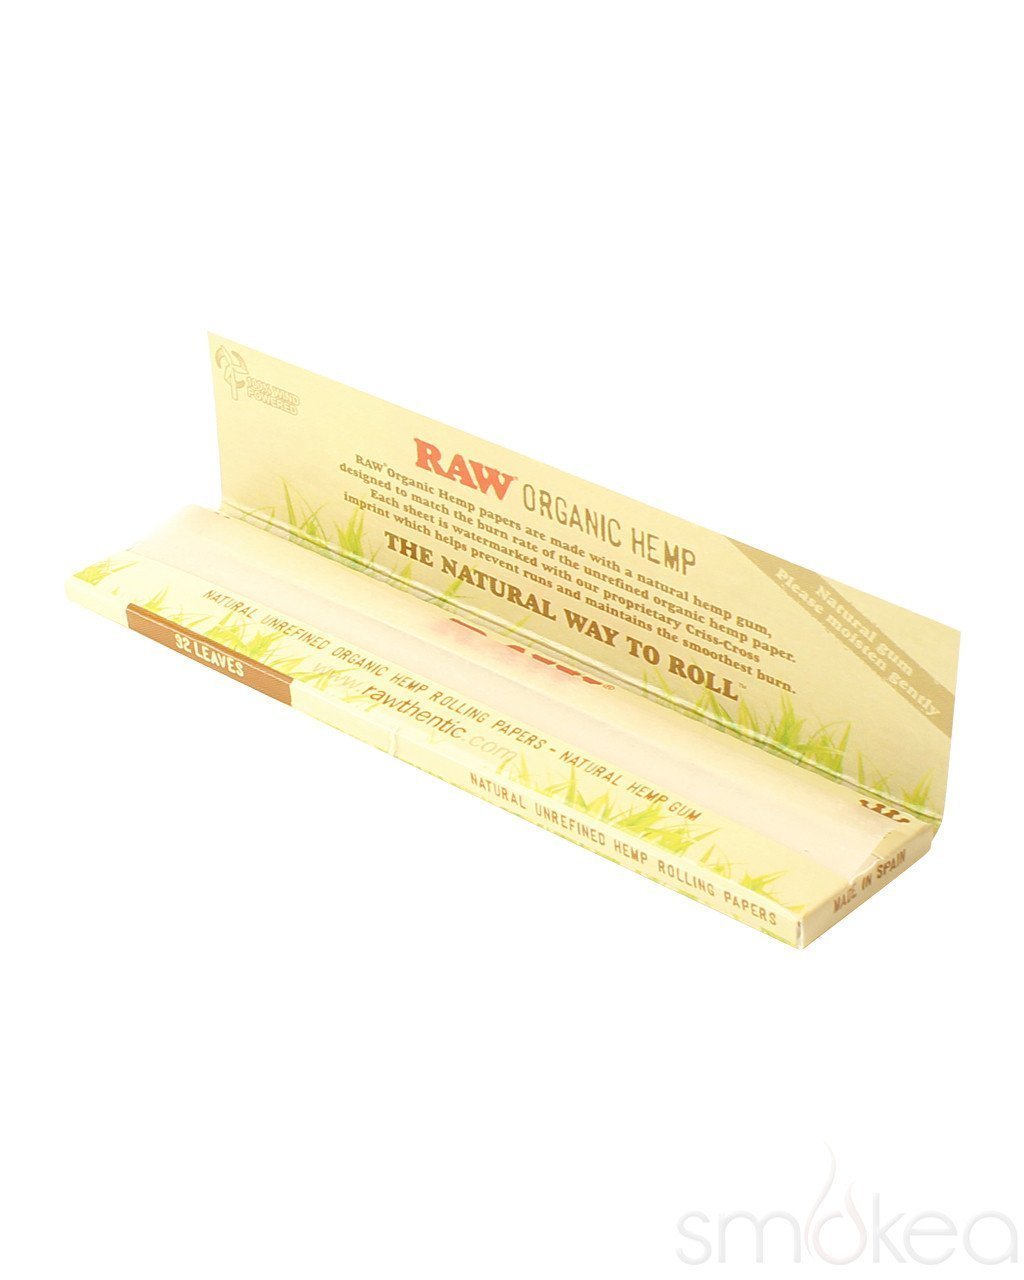 Raw Organic Hemp Kingsize Slim Rolling Papers (Full Box) - Bittchaser Smoke Shop